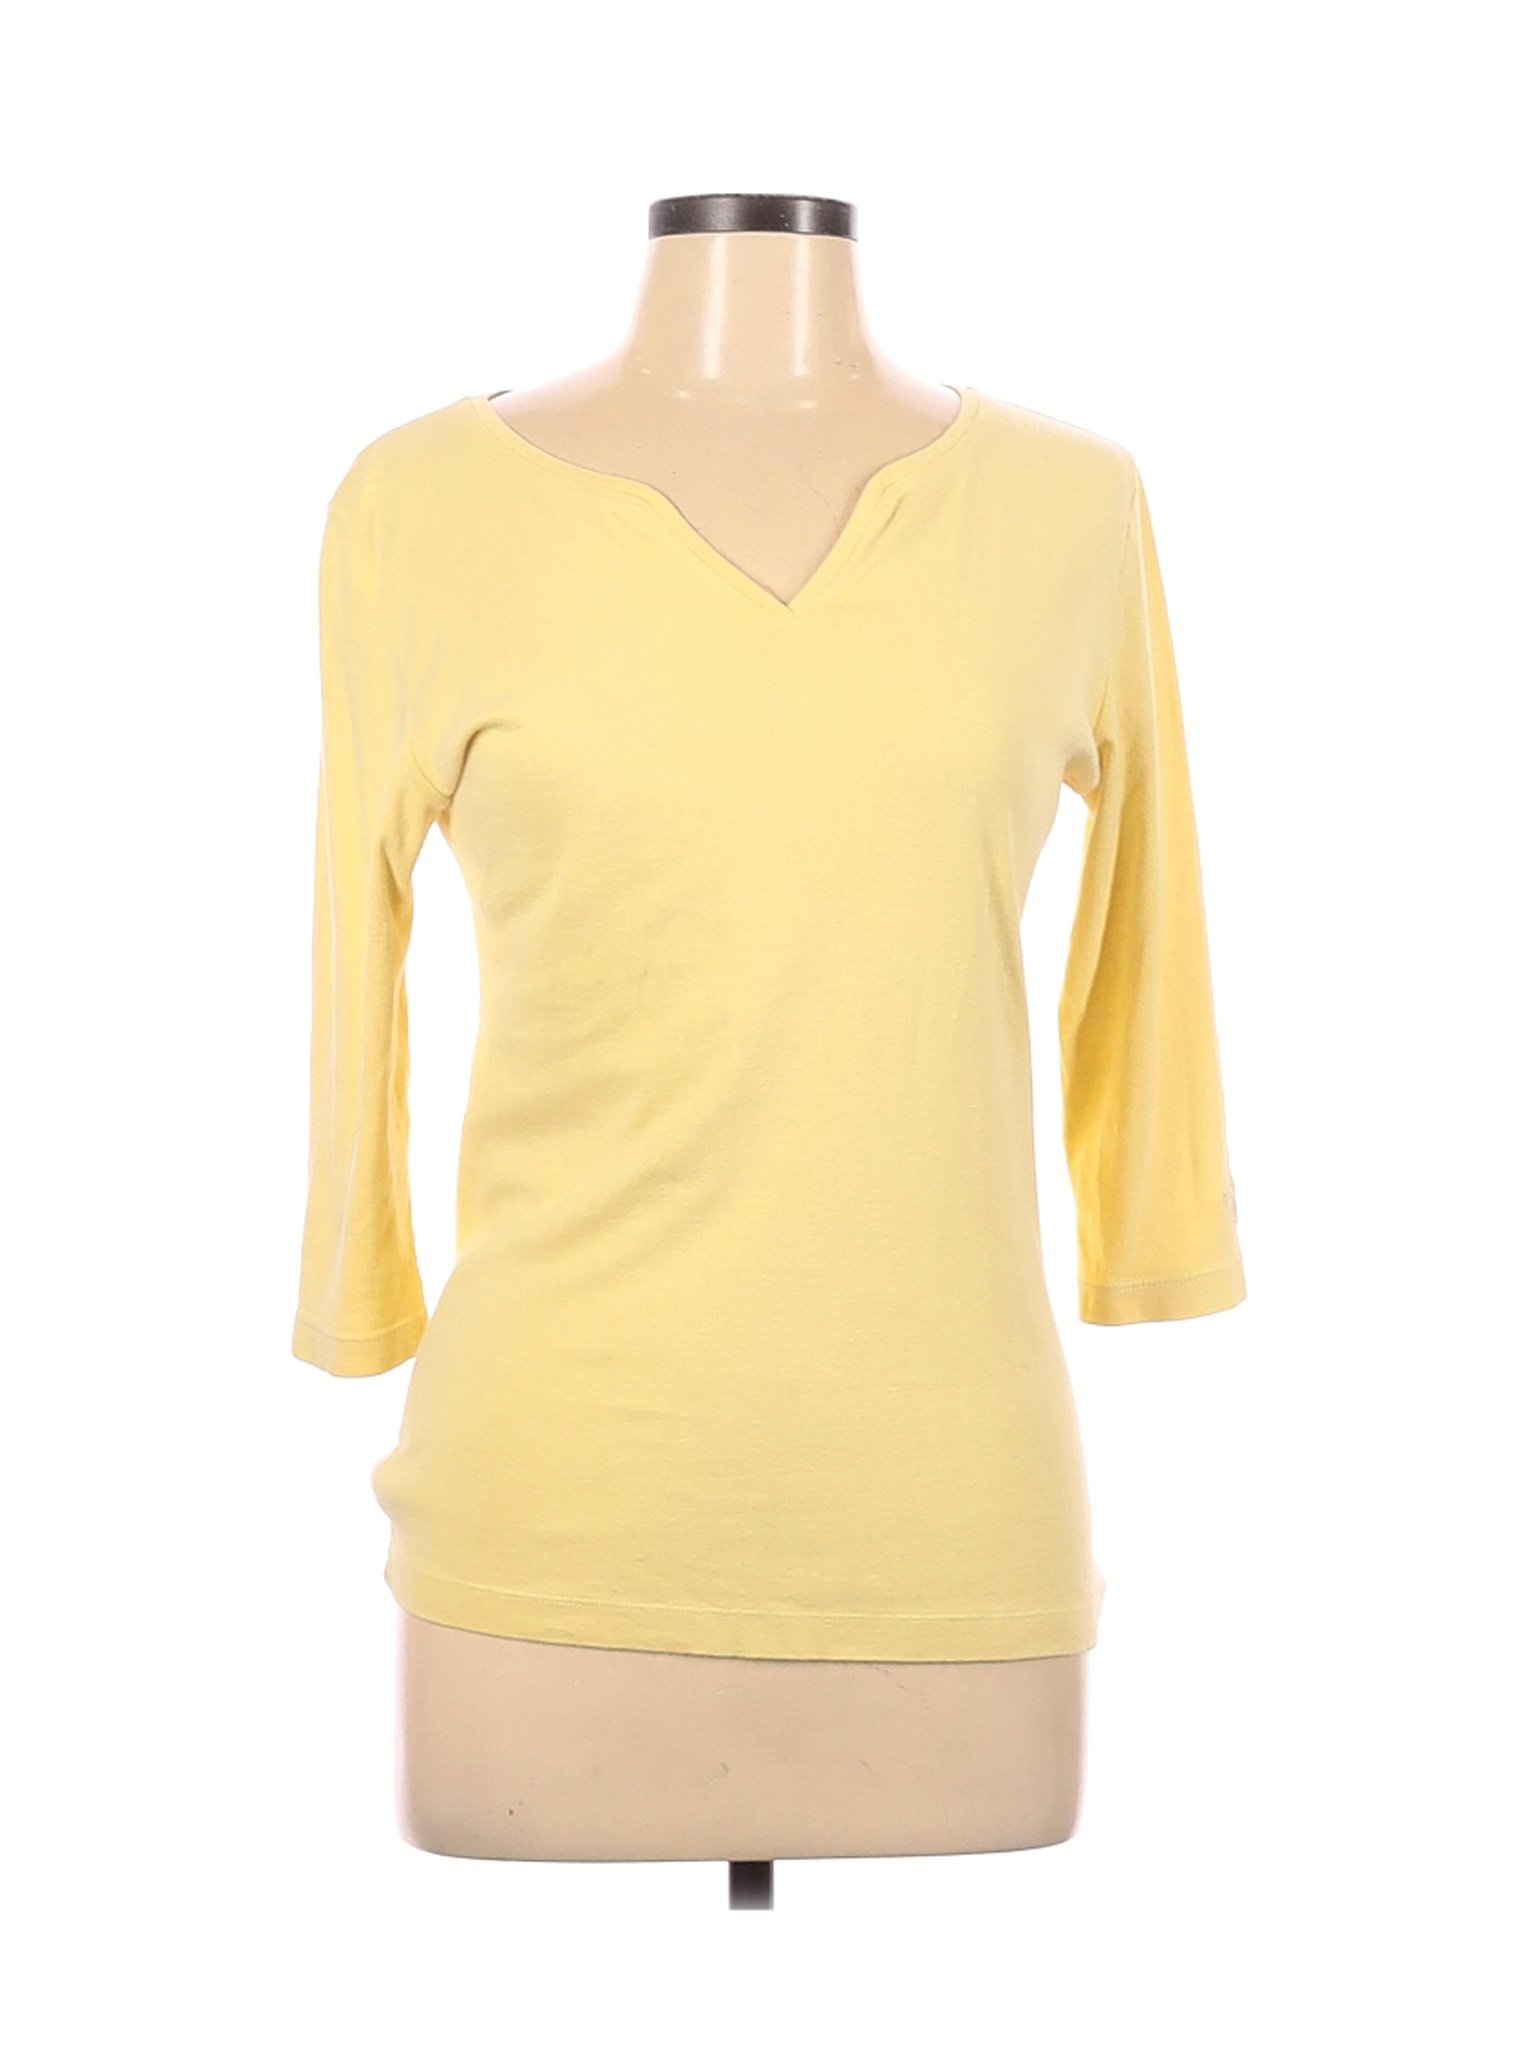 Dismero Women Yellow 3/4 Sleeve T-Shirt L | eBay